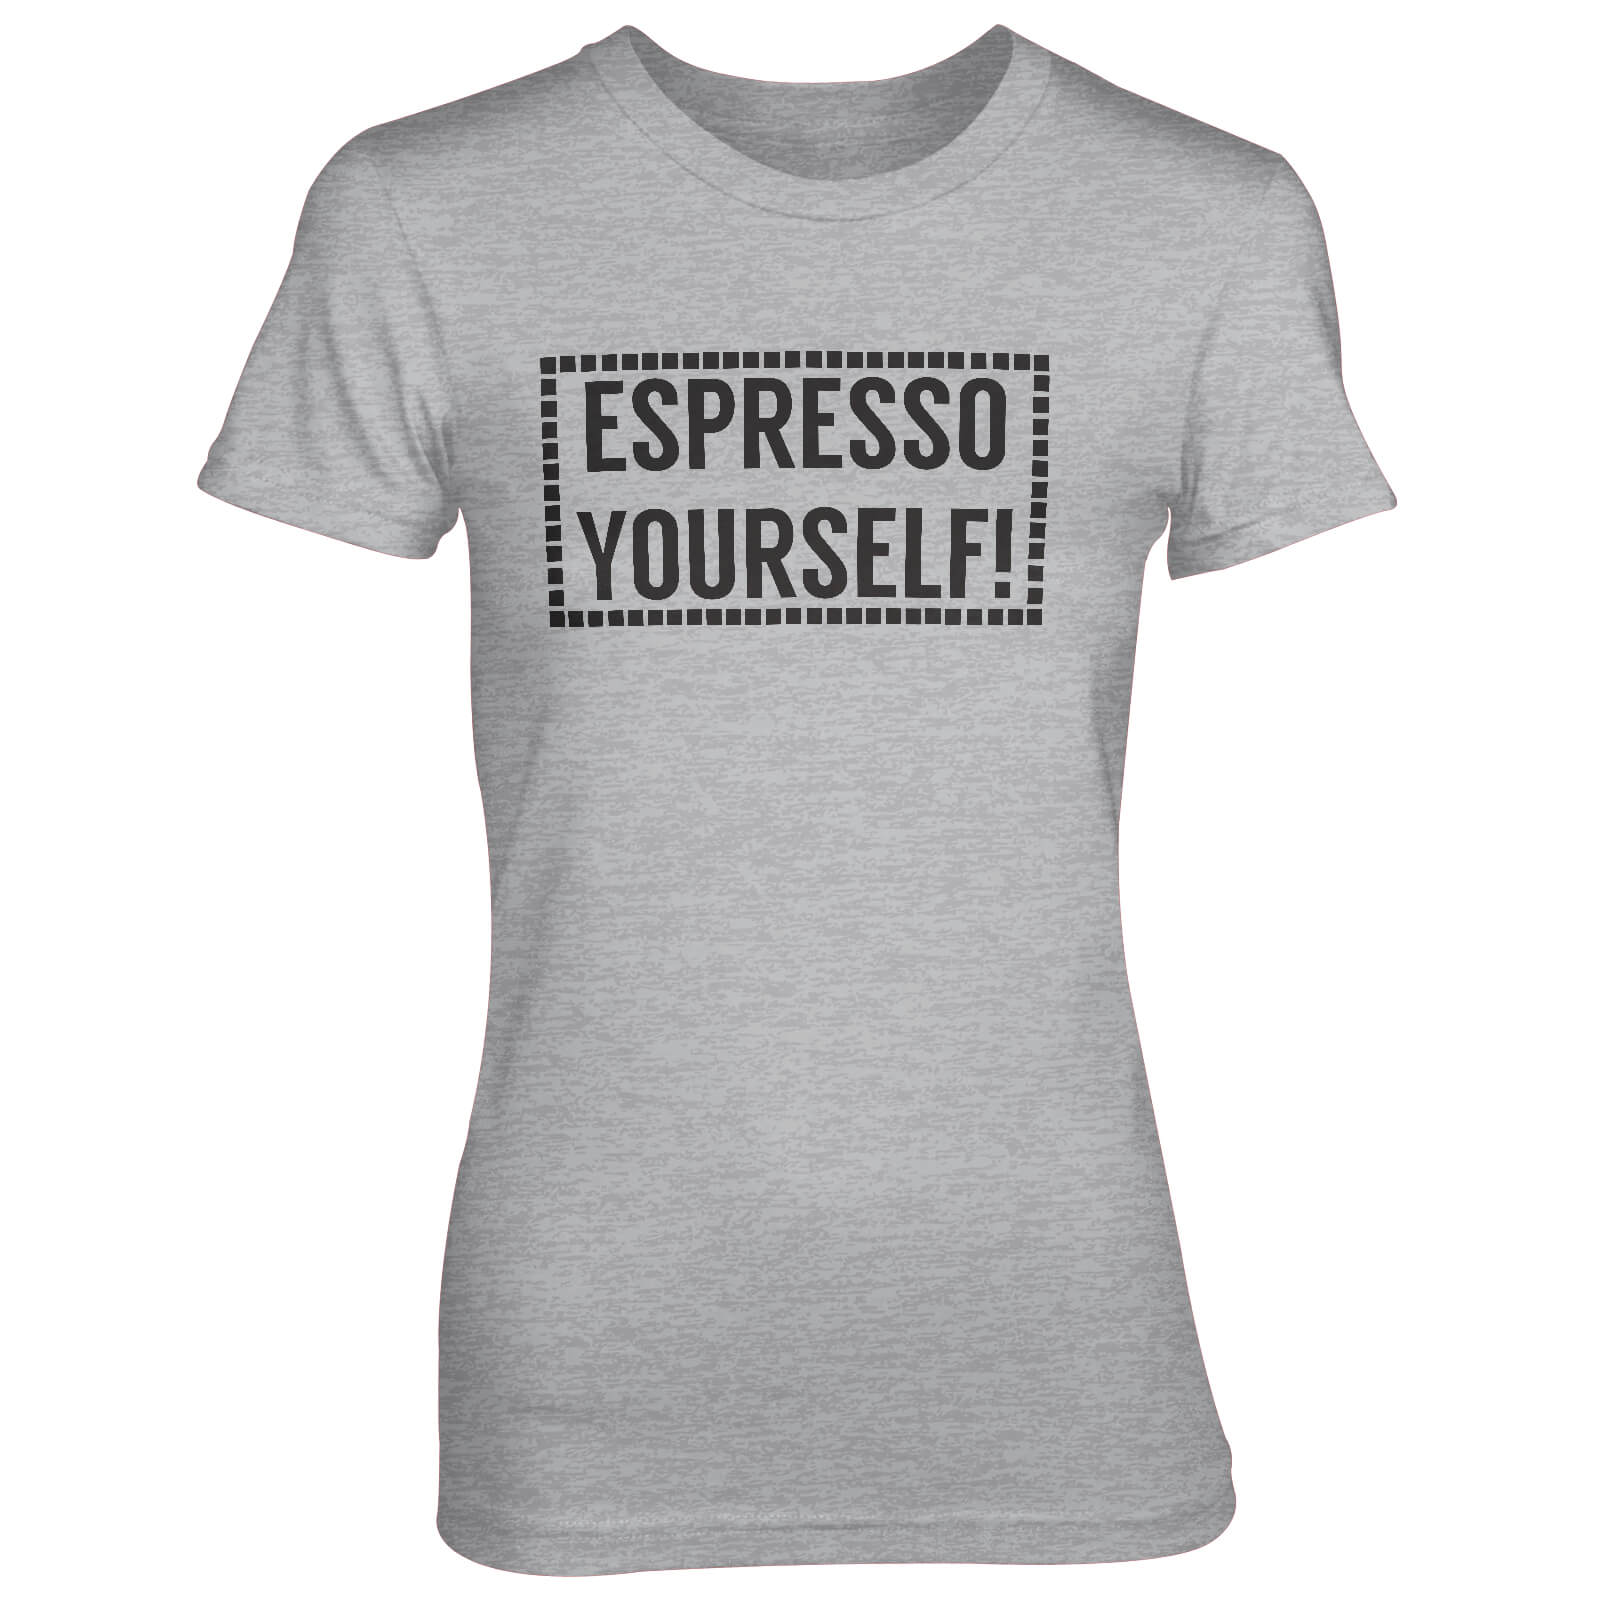 Espresso Yourself! Women's Grey T-Shirt - S - Grey